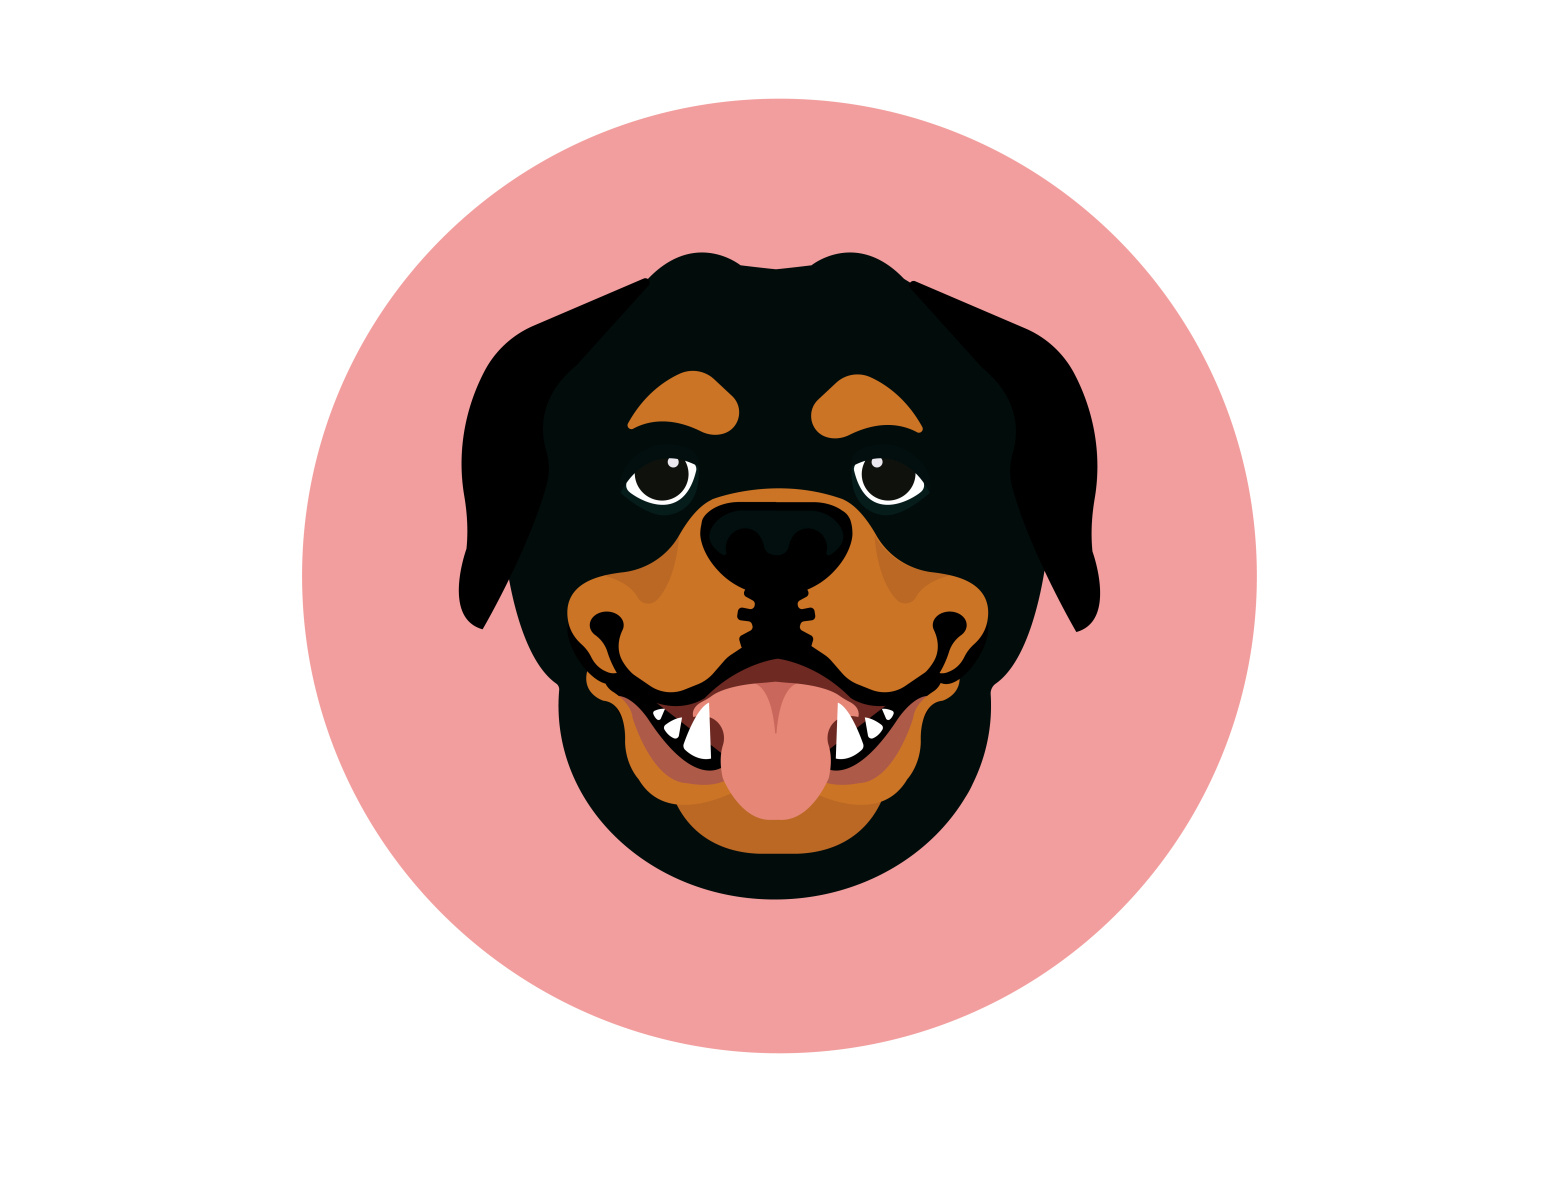 Cute Brown Dog Avatar Cartoon Vector có sẵn miễn phí bản quyền  1425725378  Shutterstock